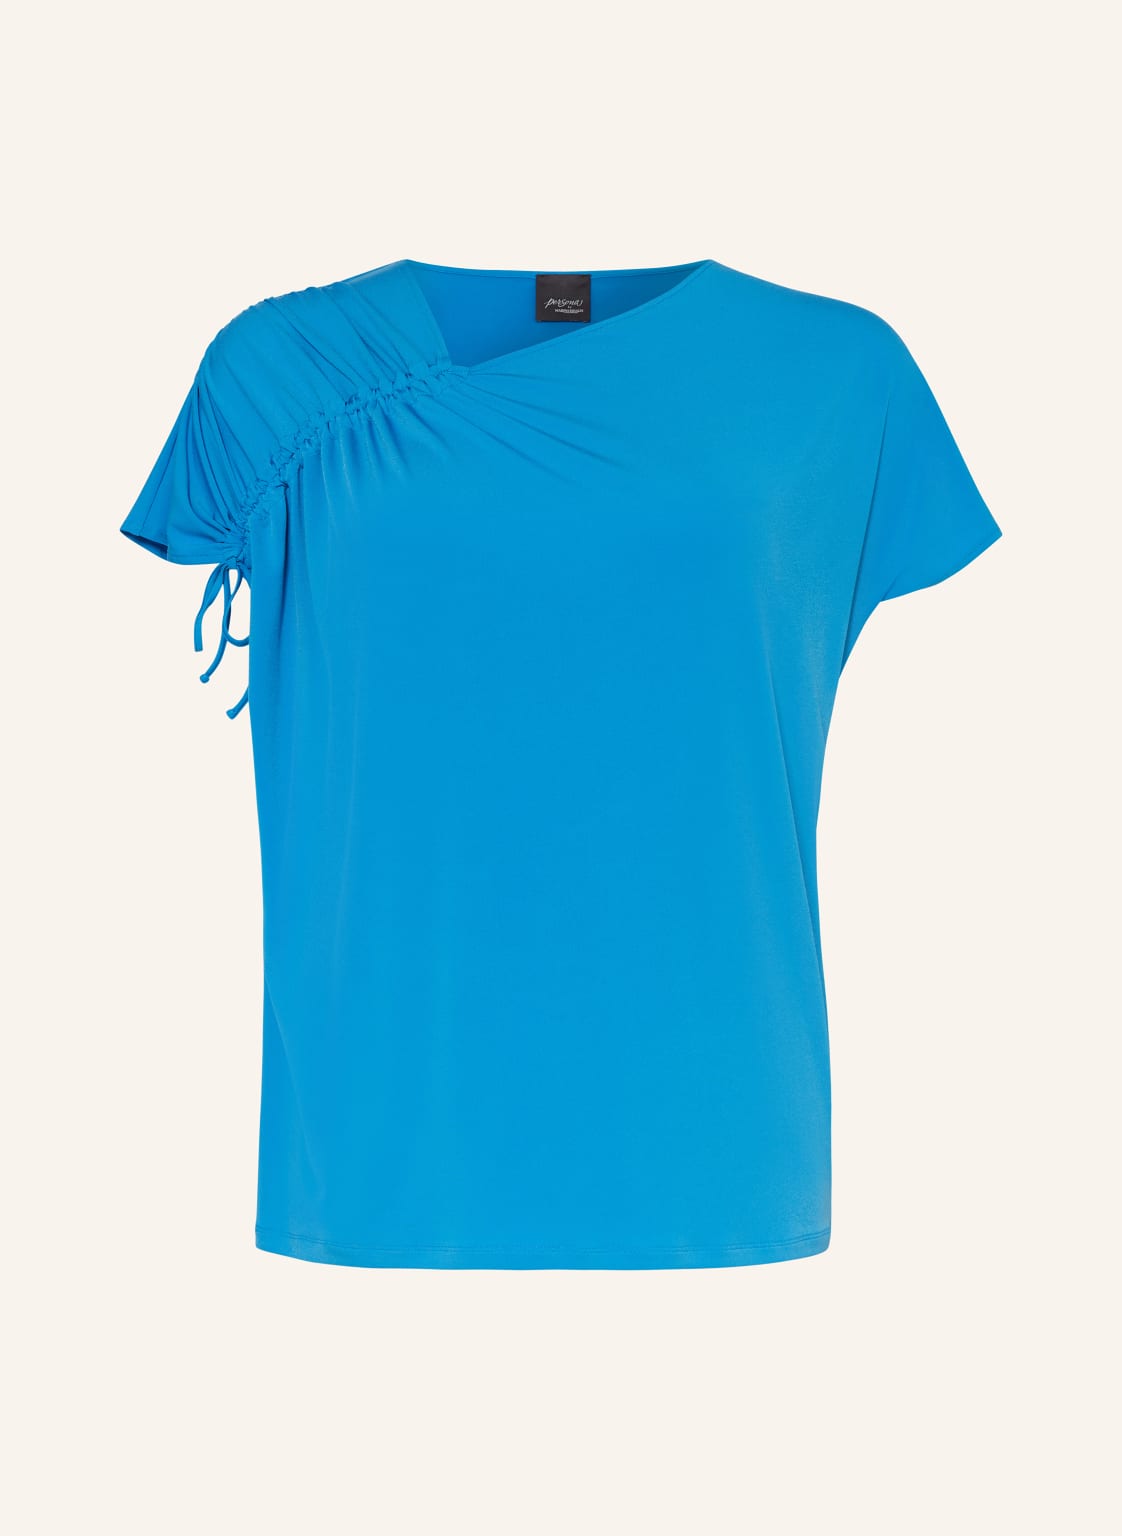 Marina Rinaldi Persona T-Shirt blau von MARINA RINALDI PERSONA